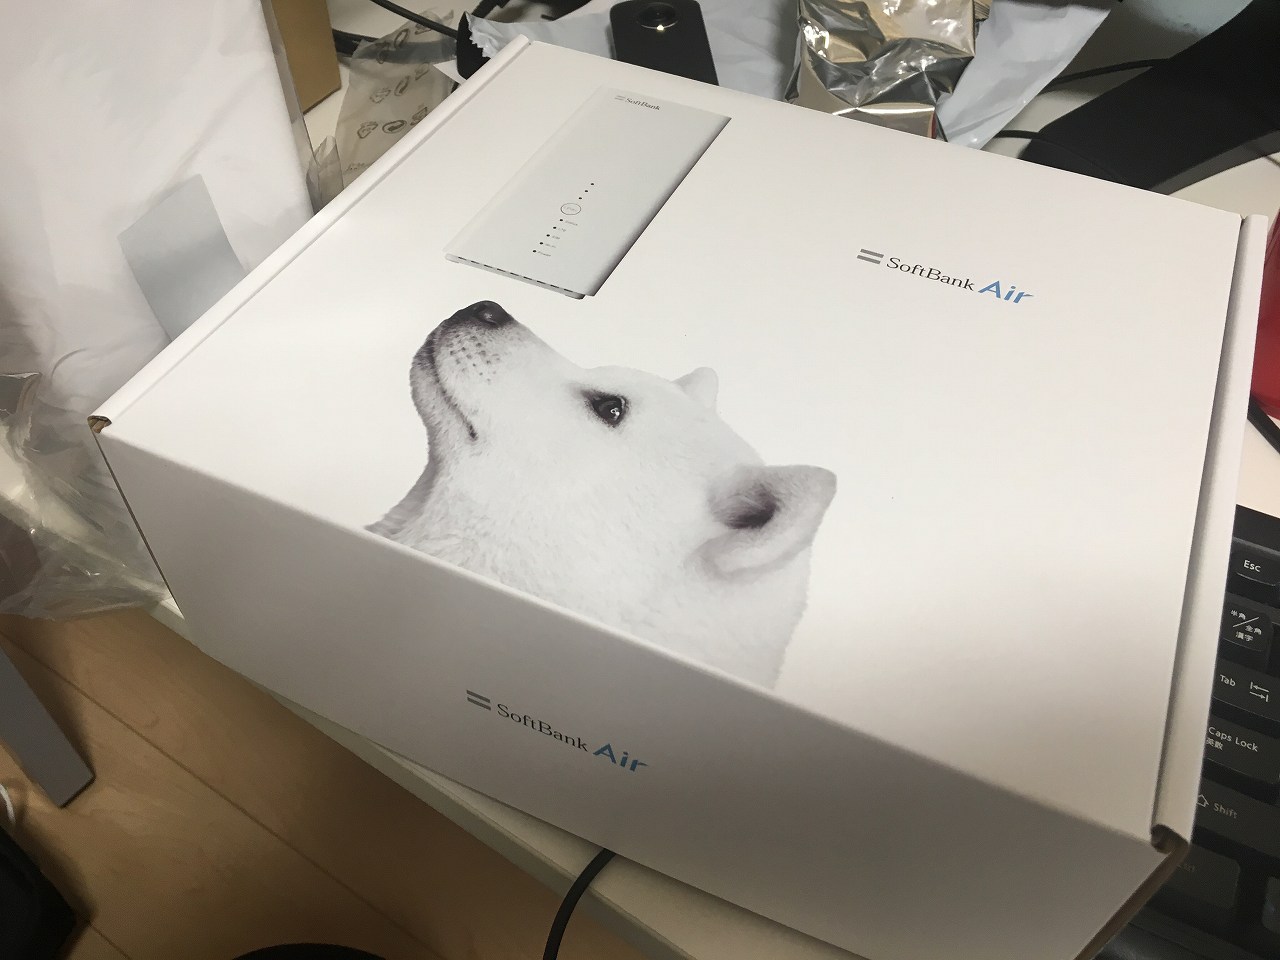 SoftbankAir(ソフトバンクエアー)梱包箱　お父さん犬が表示されている